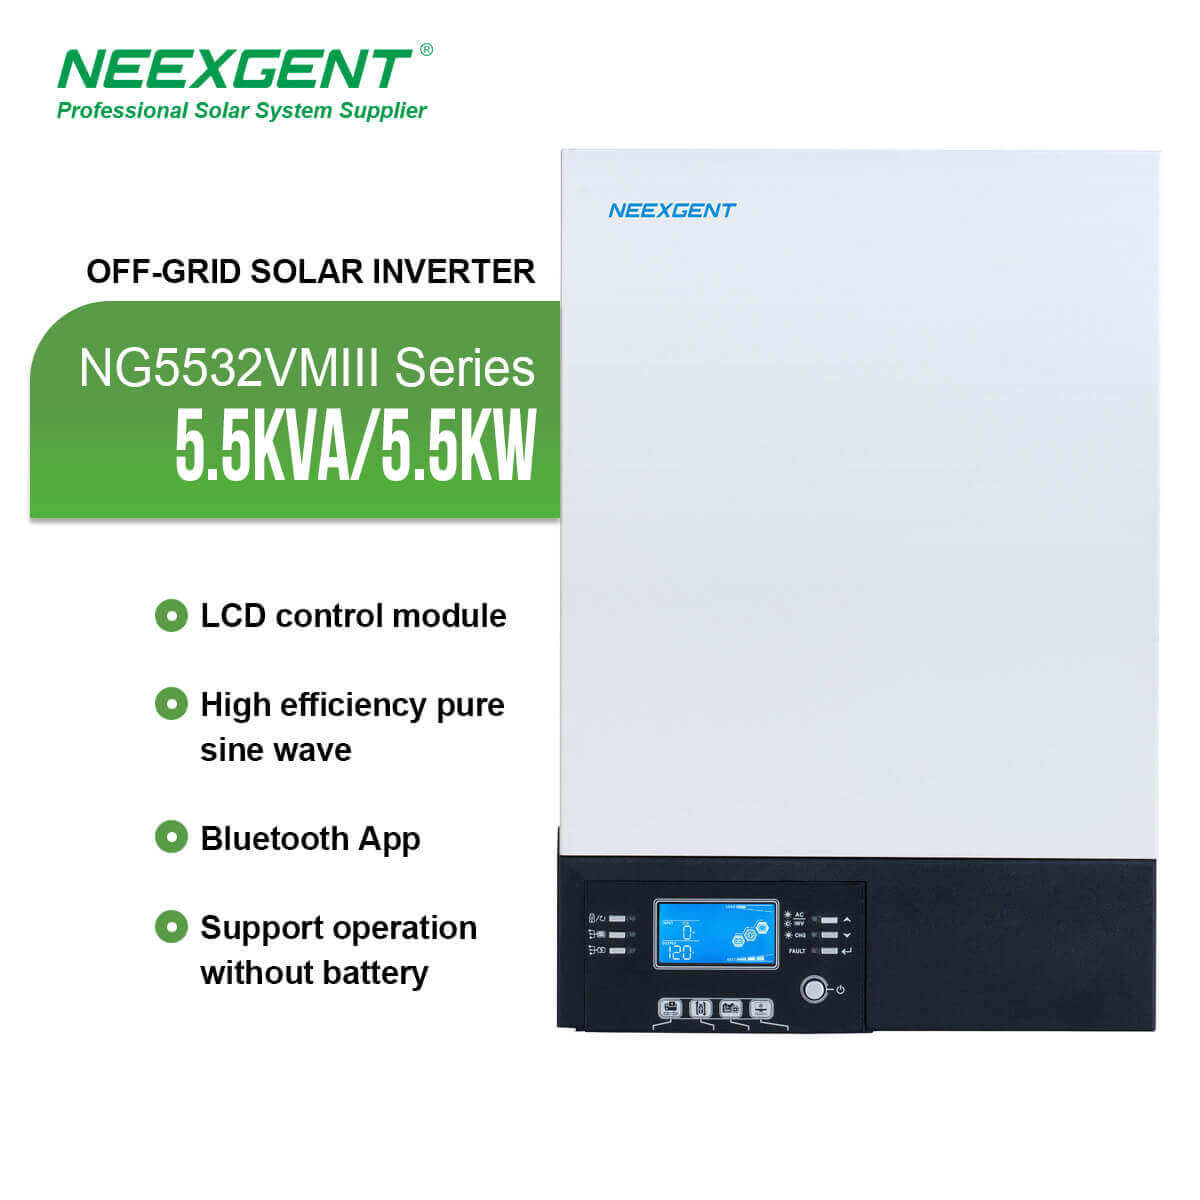 Choosing the Perfect Solar Inverter